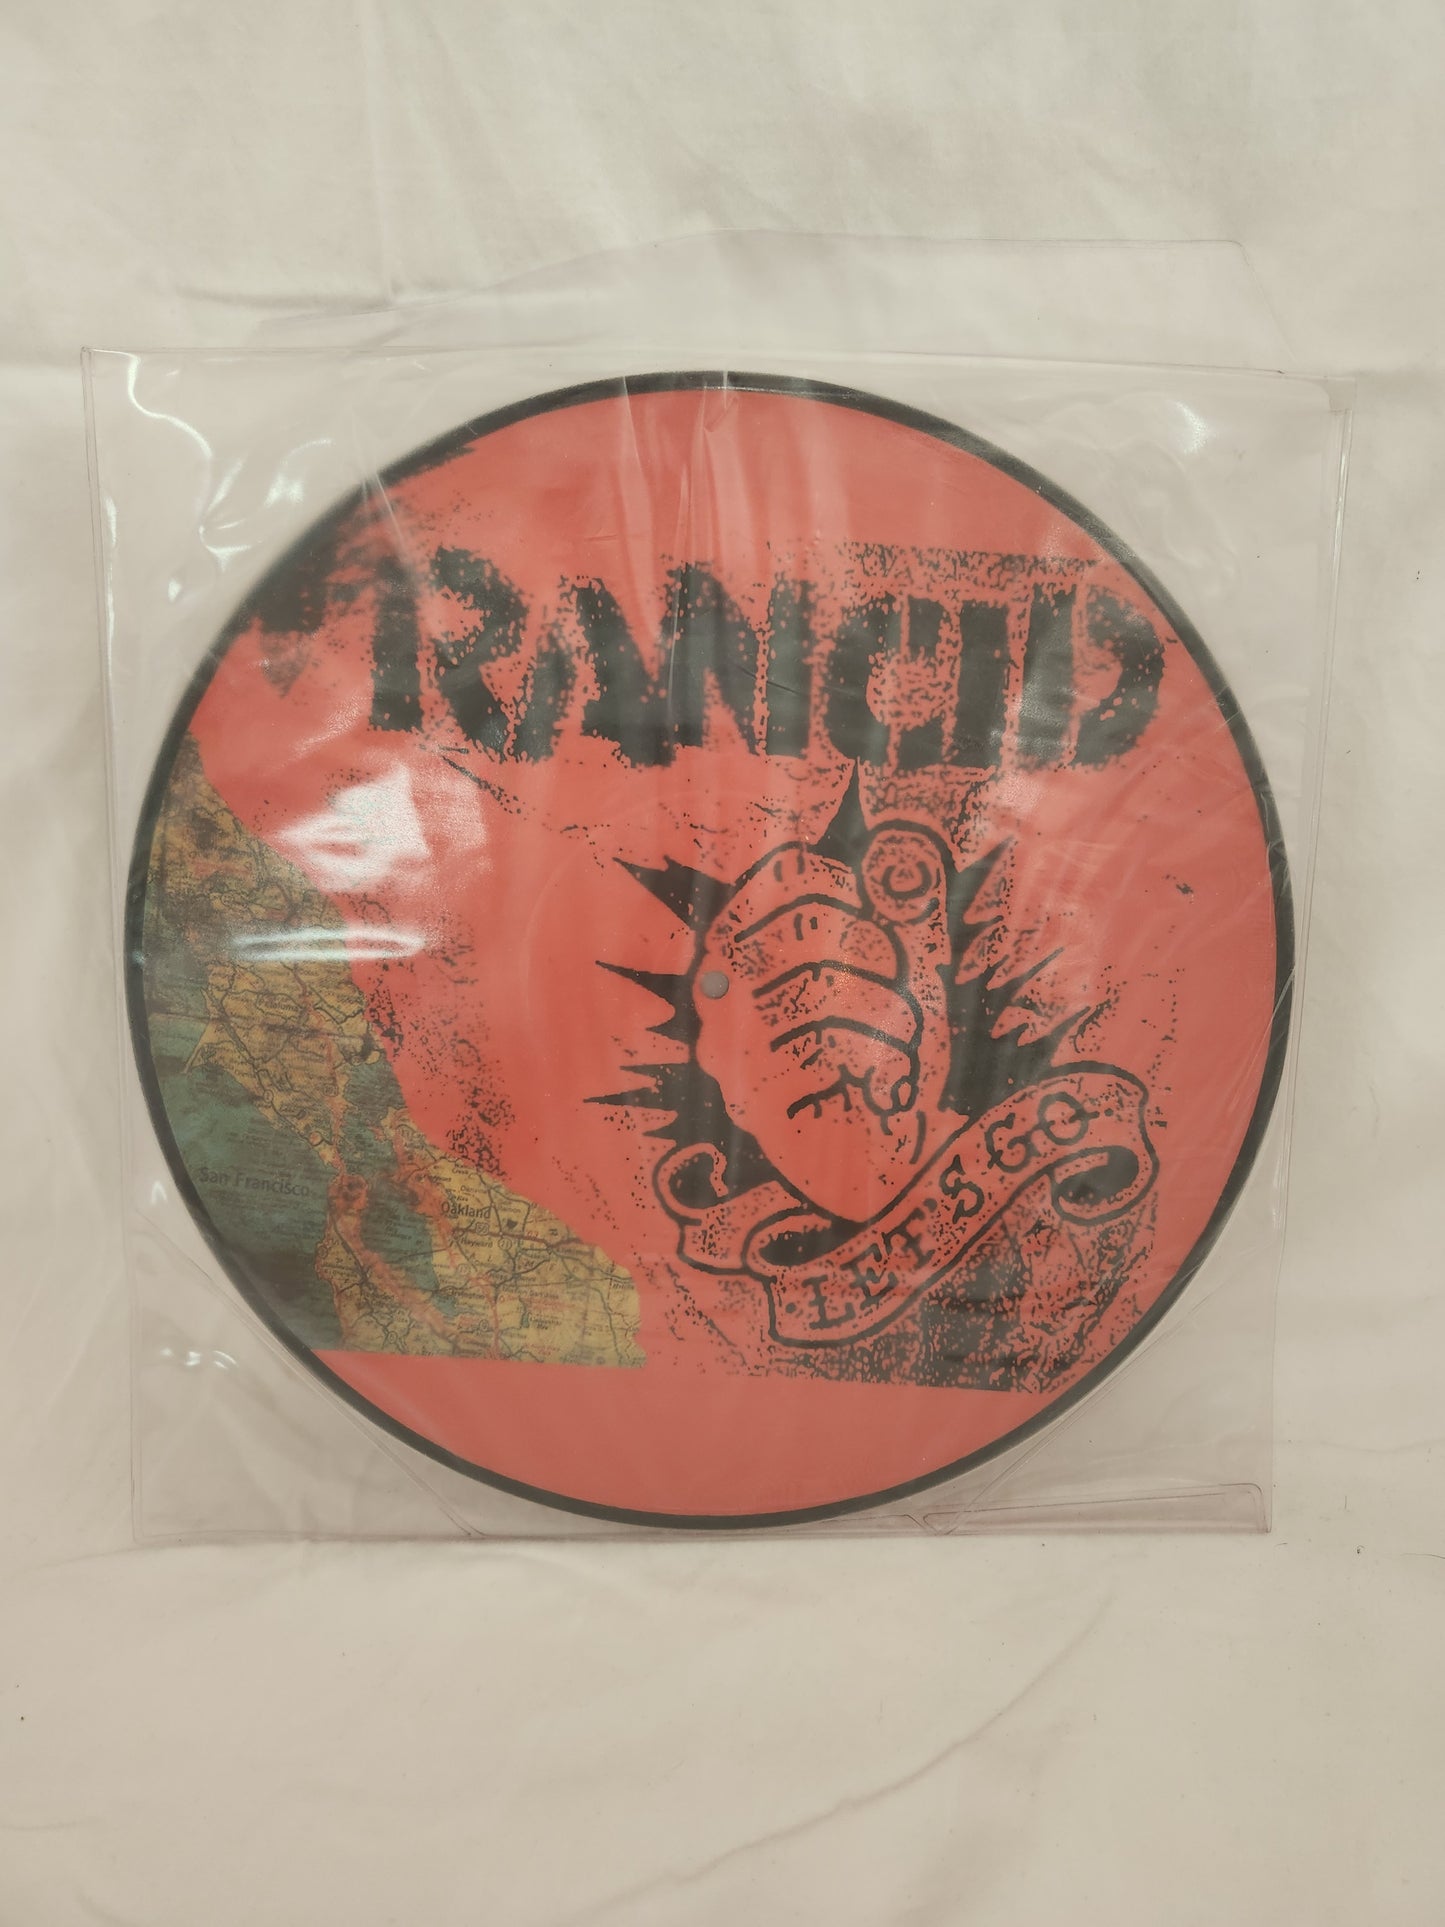 Rancid - Let's Go 10th Anniversary Picture Vinyl LP